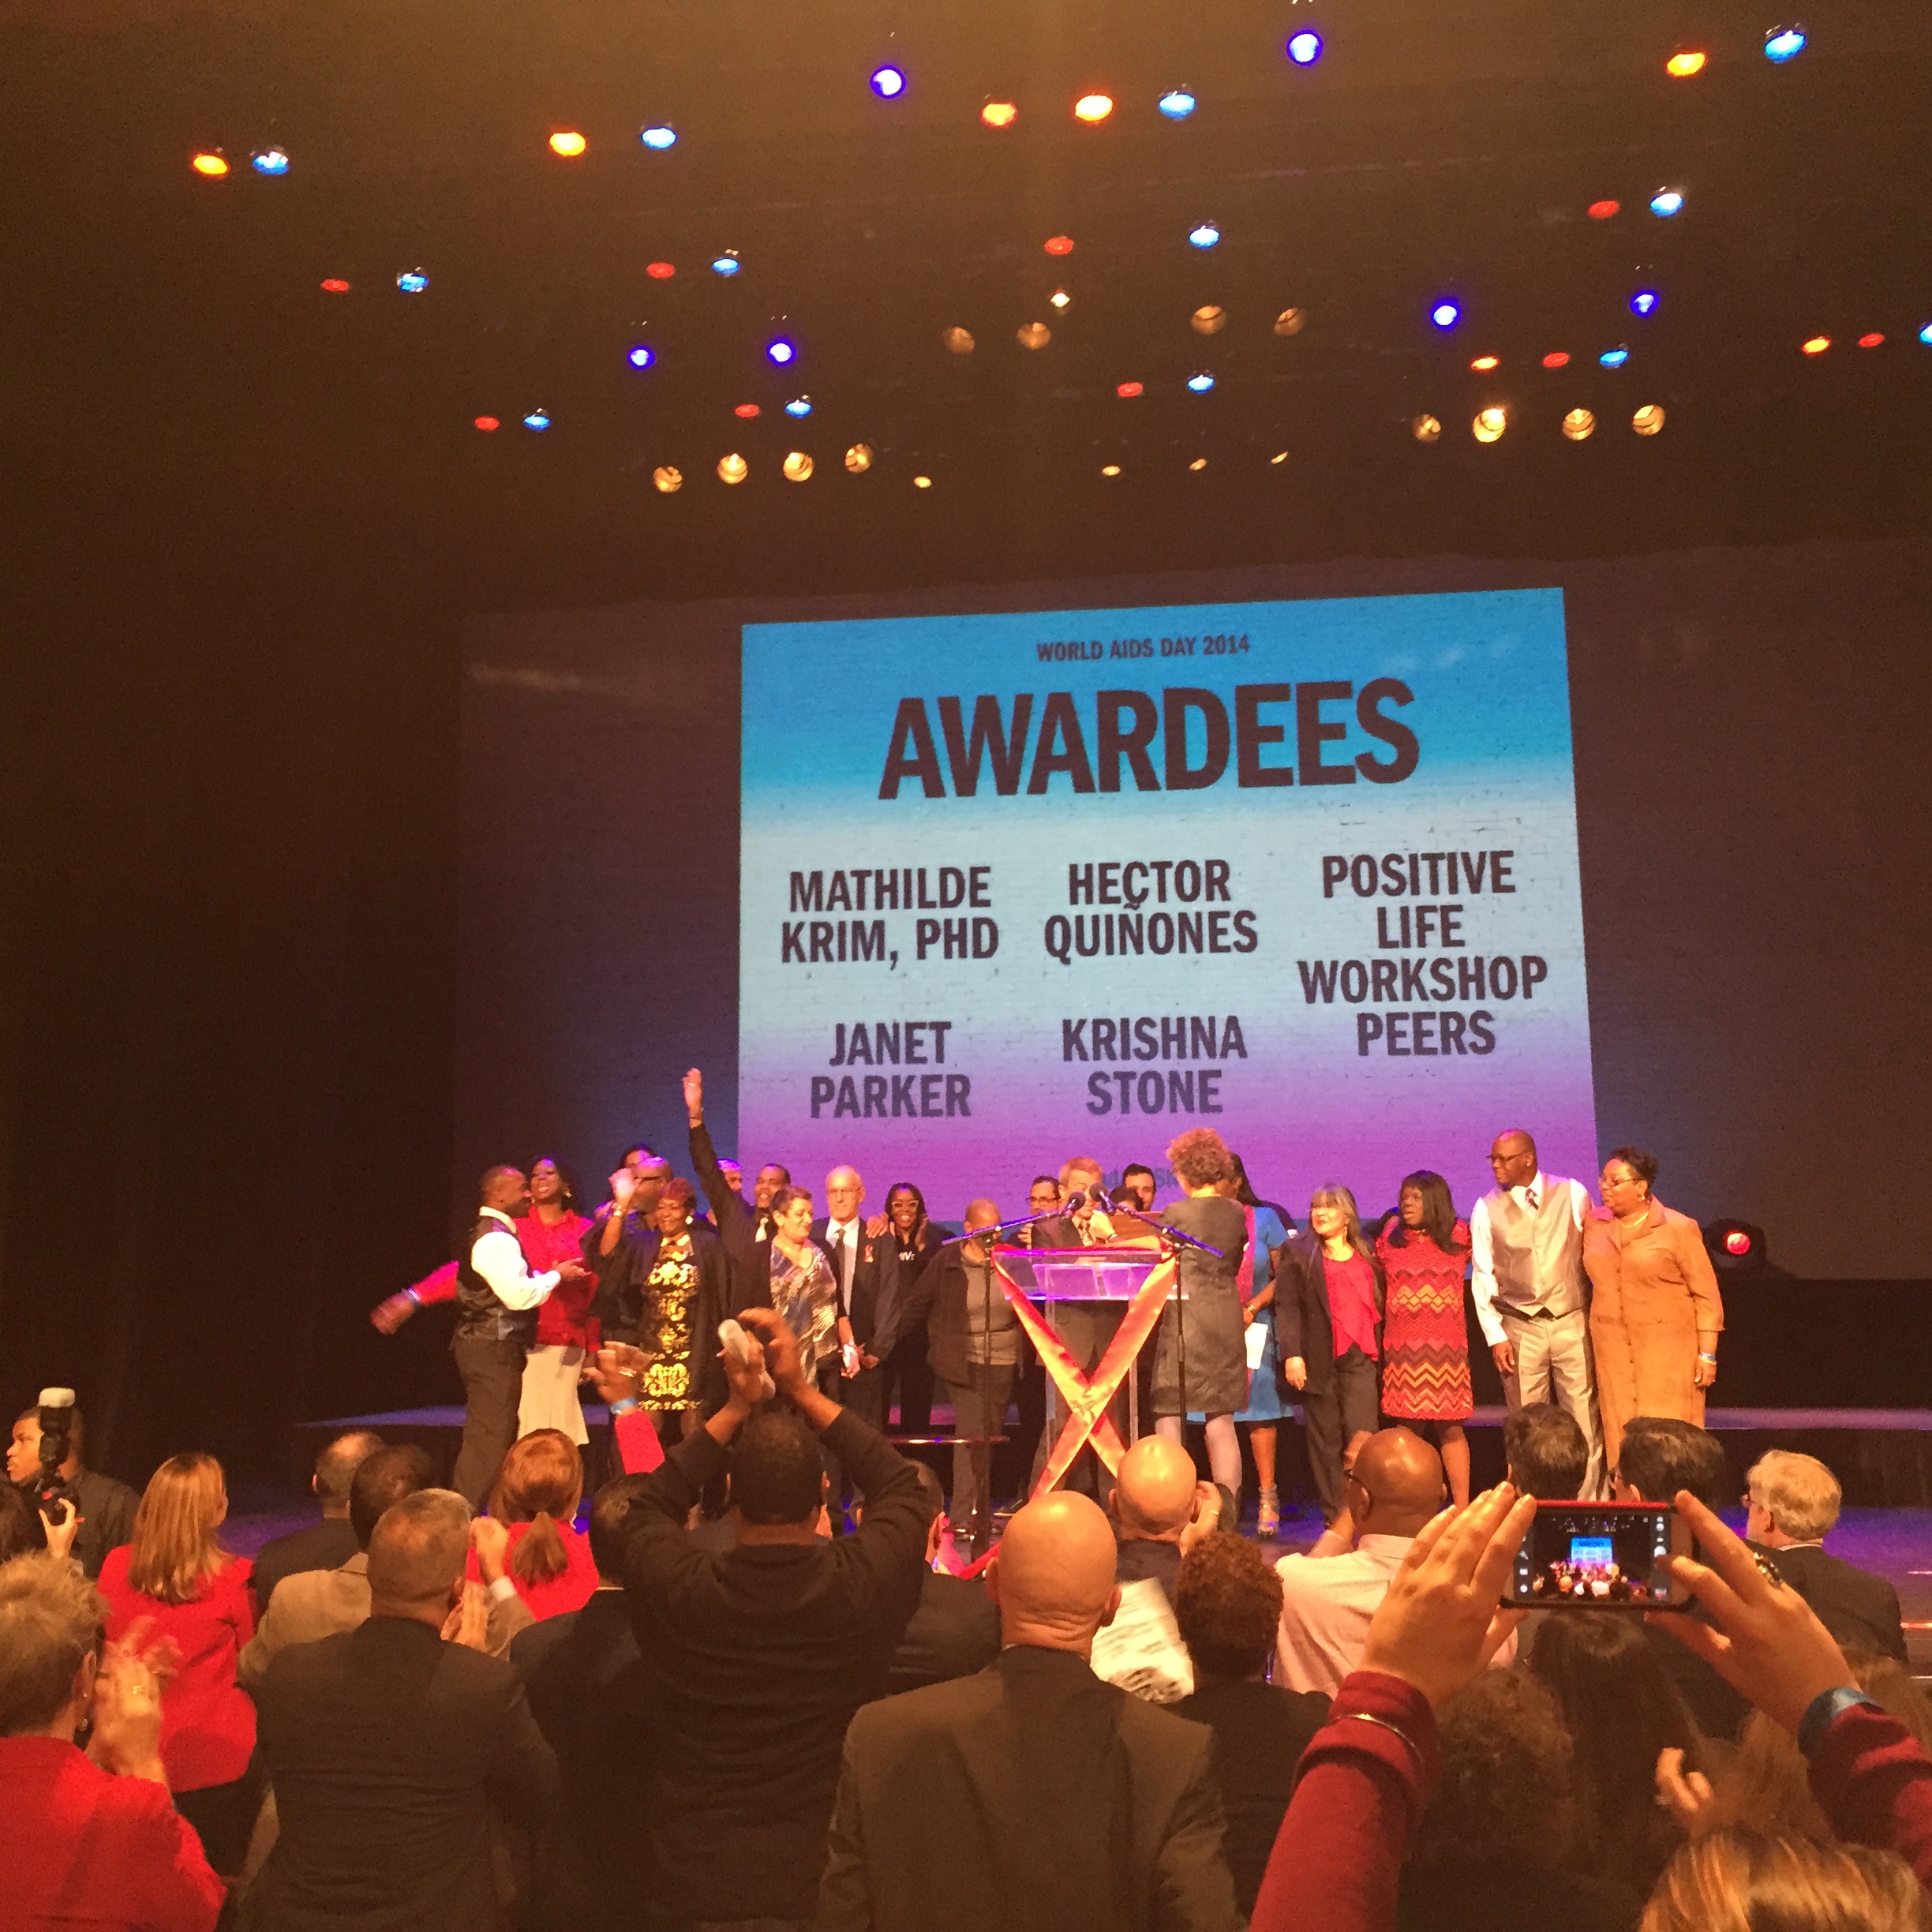 World AIDS Day 2014 Awardees